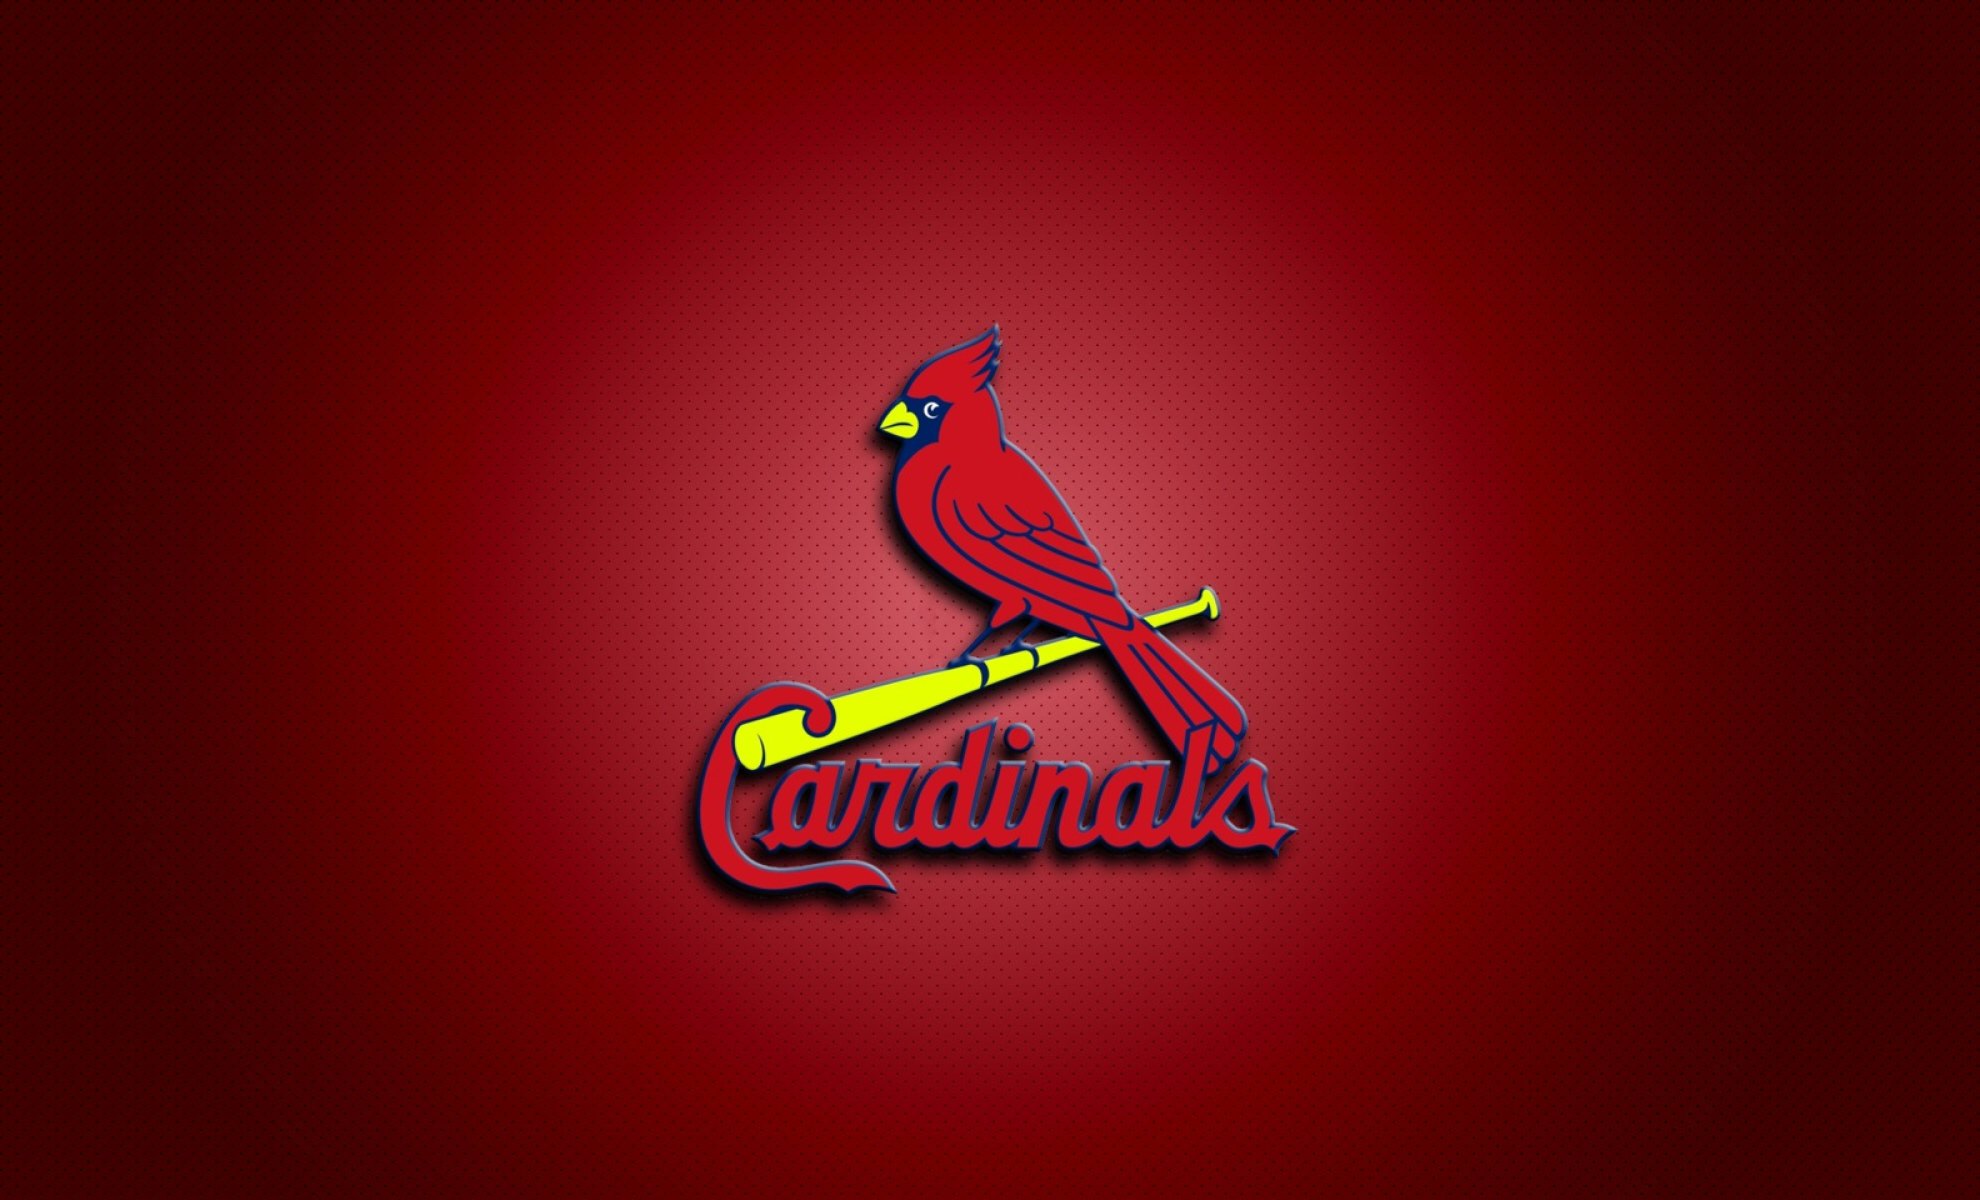 st louis cardinals, sports, baseball, emblem, logo, mlb